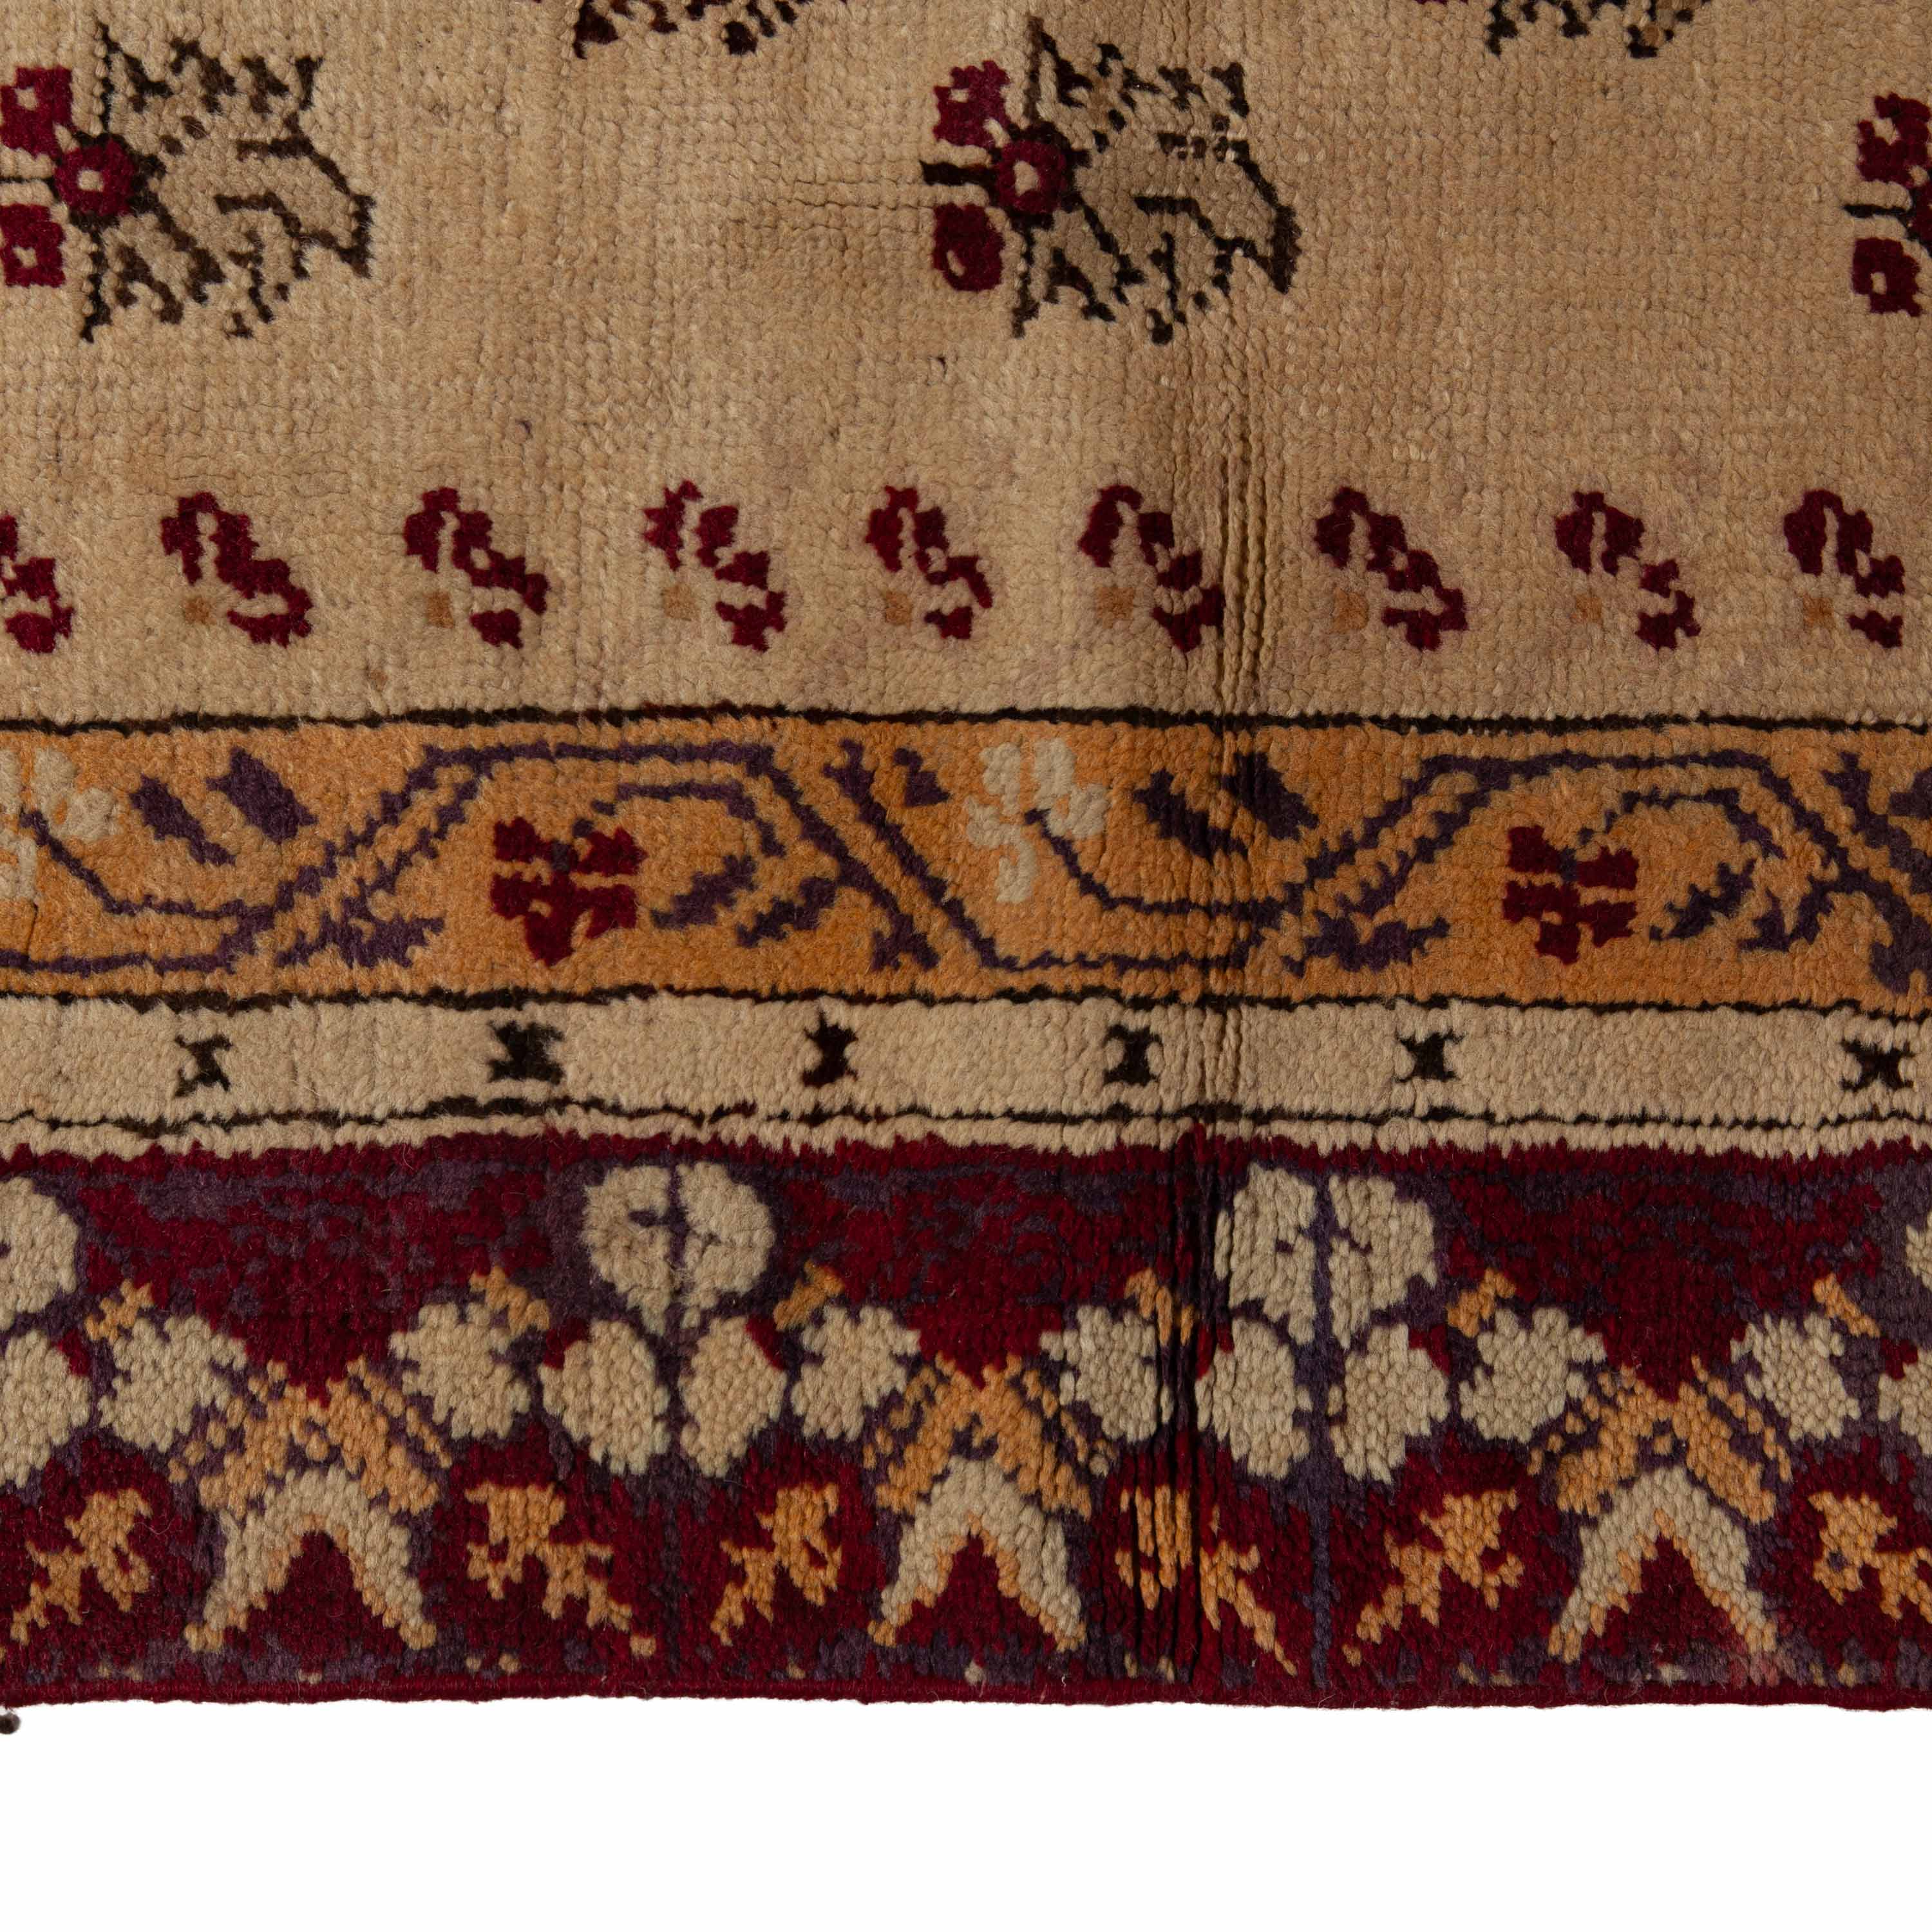 Brown Vintage Traditional Wool Persian Rug - 11'3" x 15'8"